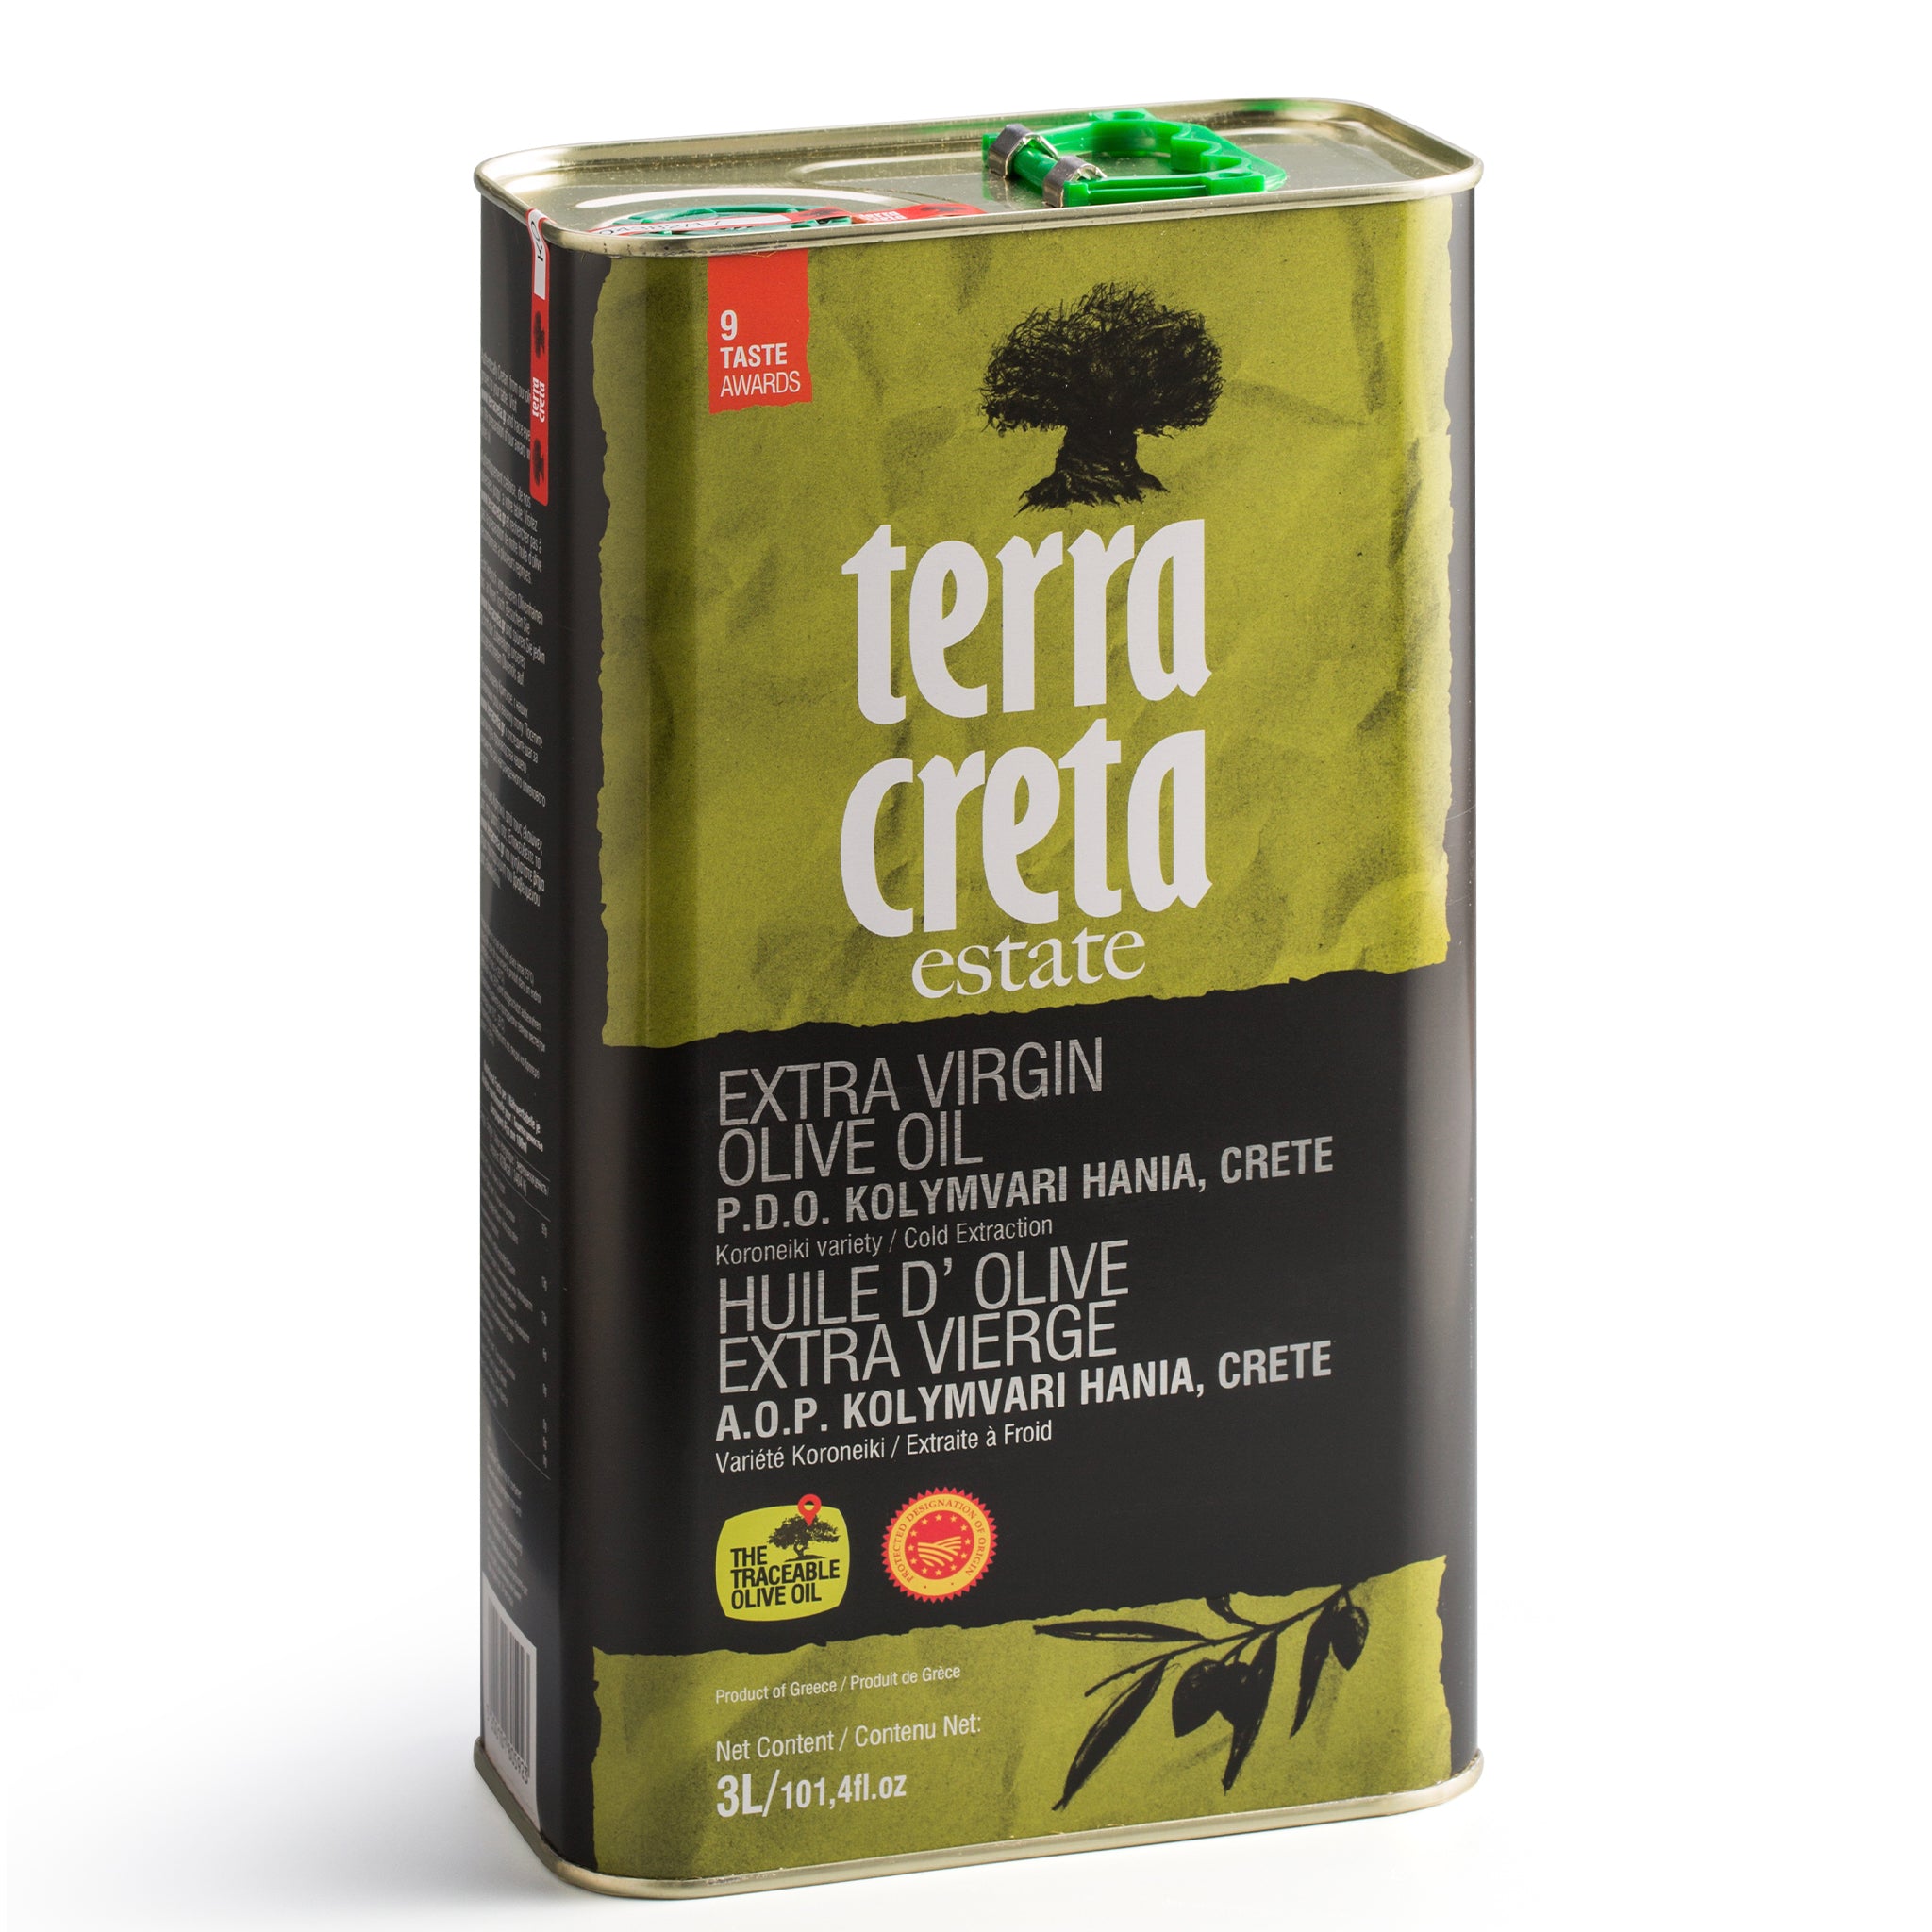 Terra Creta Estate - PDO Kolymvari Hania Kritis - Extra Virgin Olive Oil  Kolymvari Chanion Kritis AOP Oils - The opinion of 1001 Dégustations